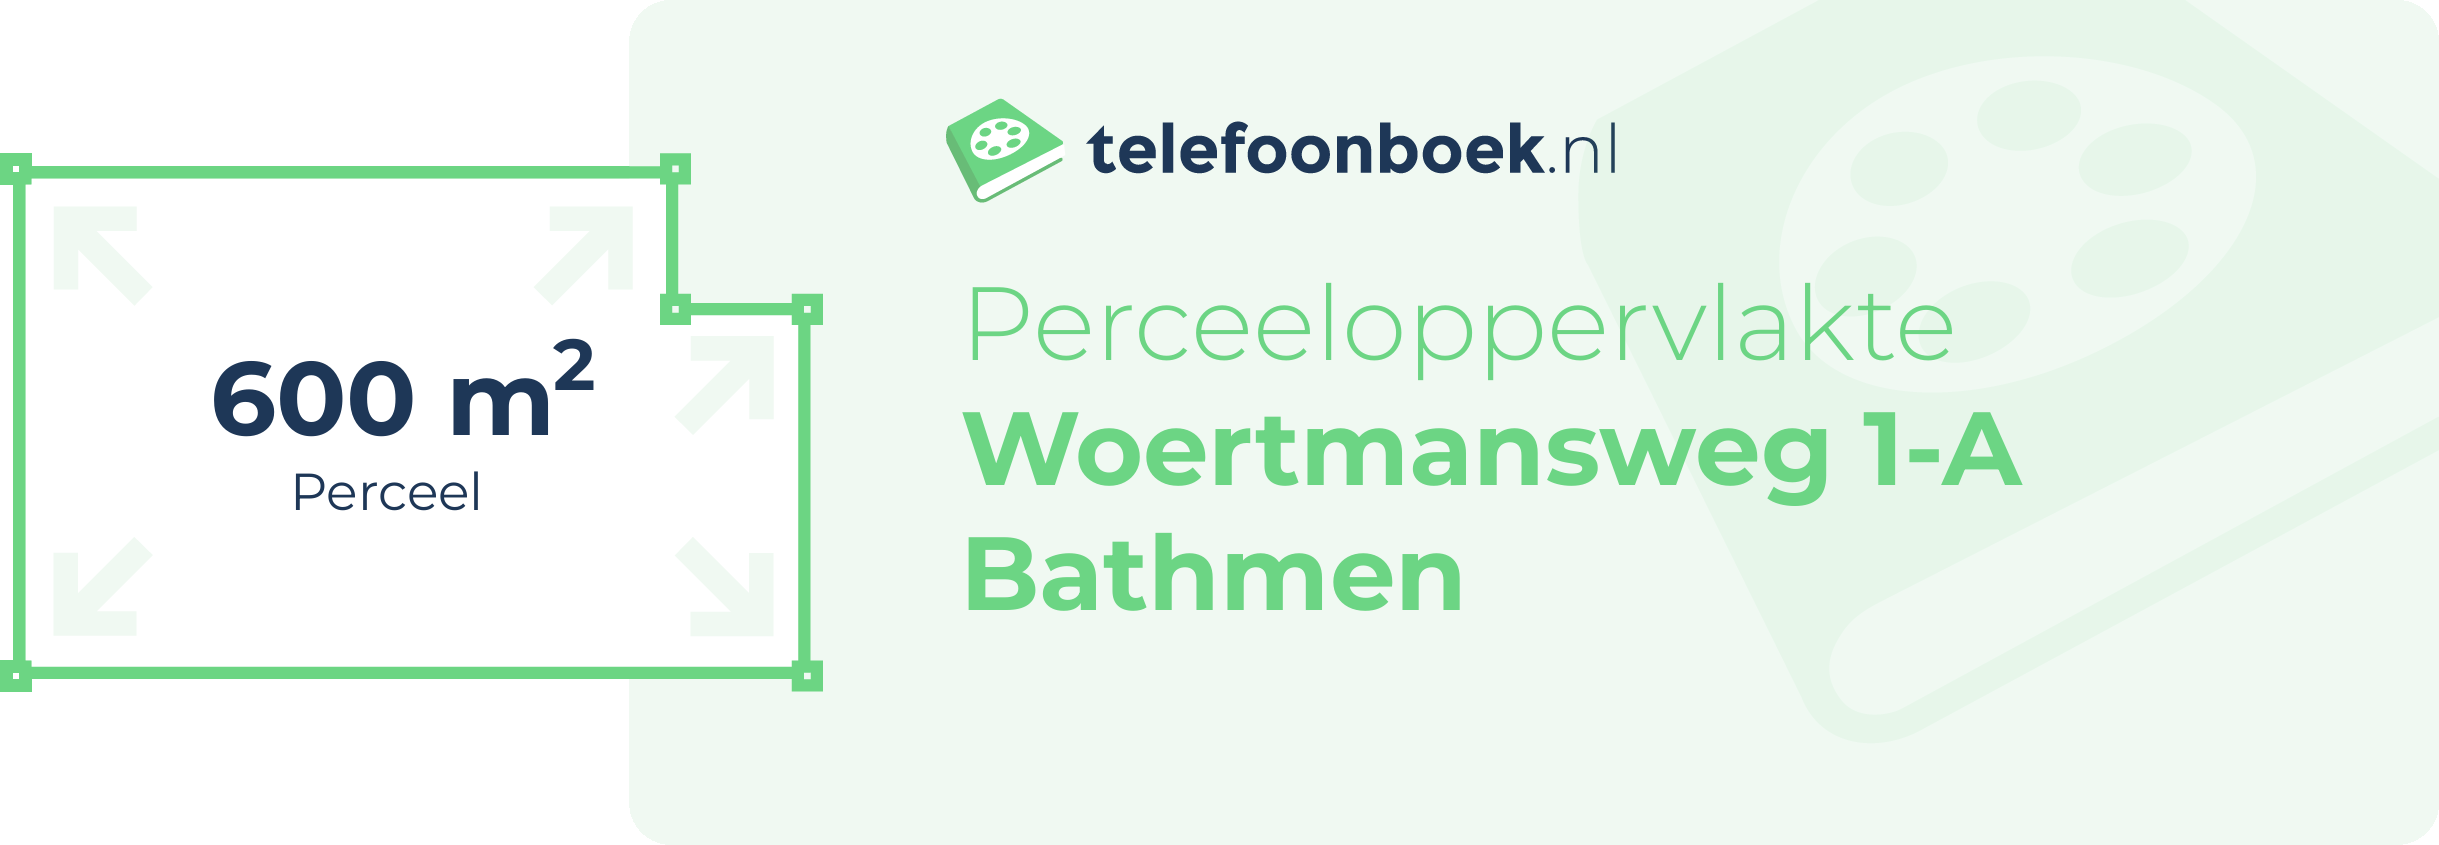 Perceeloppervlakte Woertmansweg 1-A Bathmen